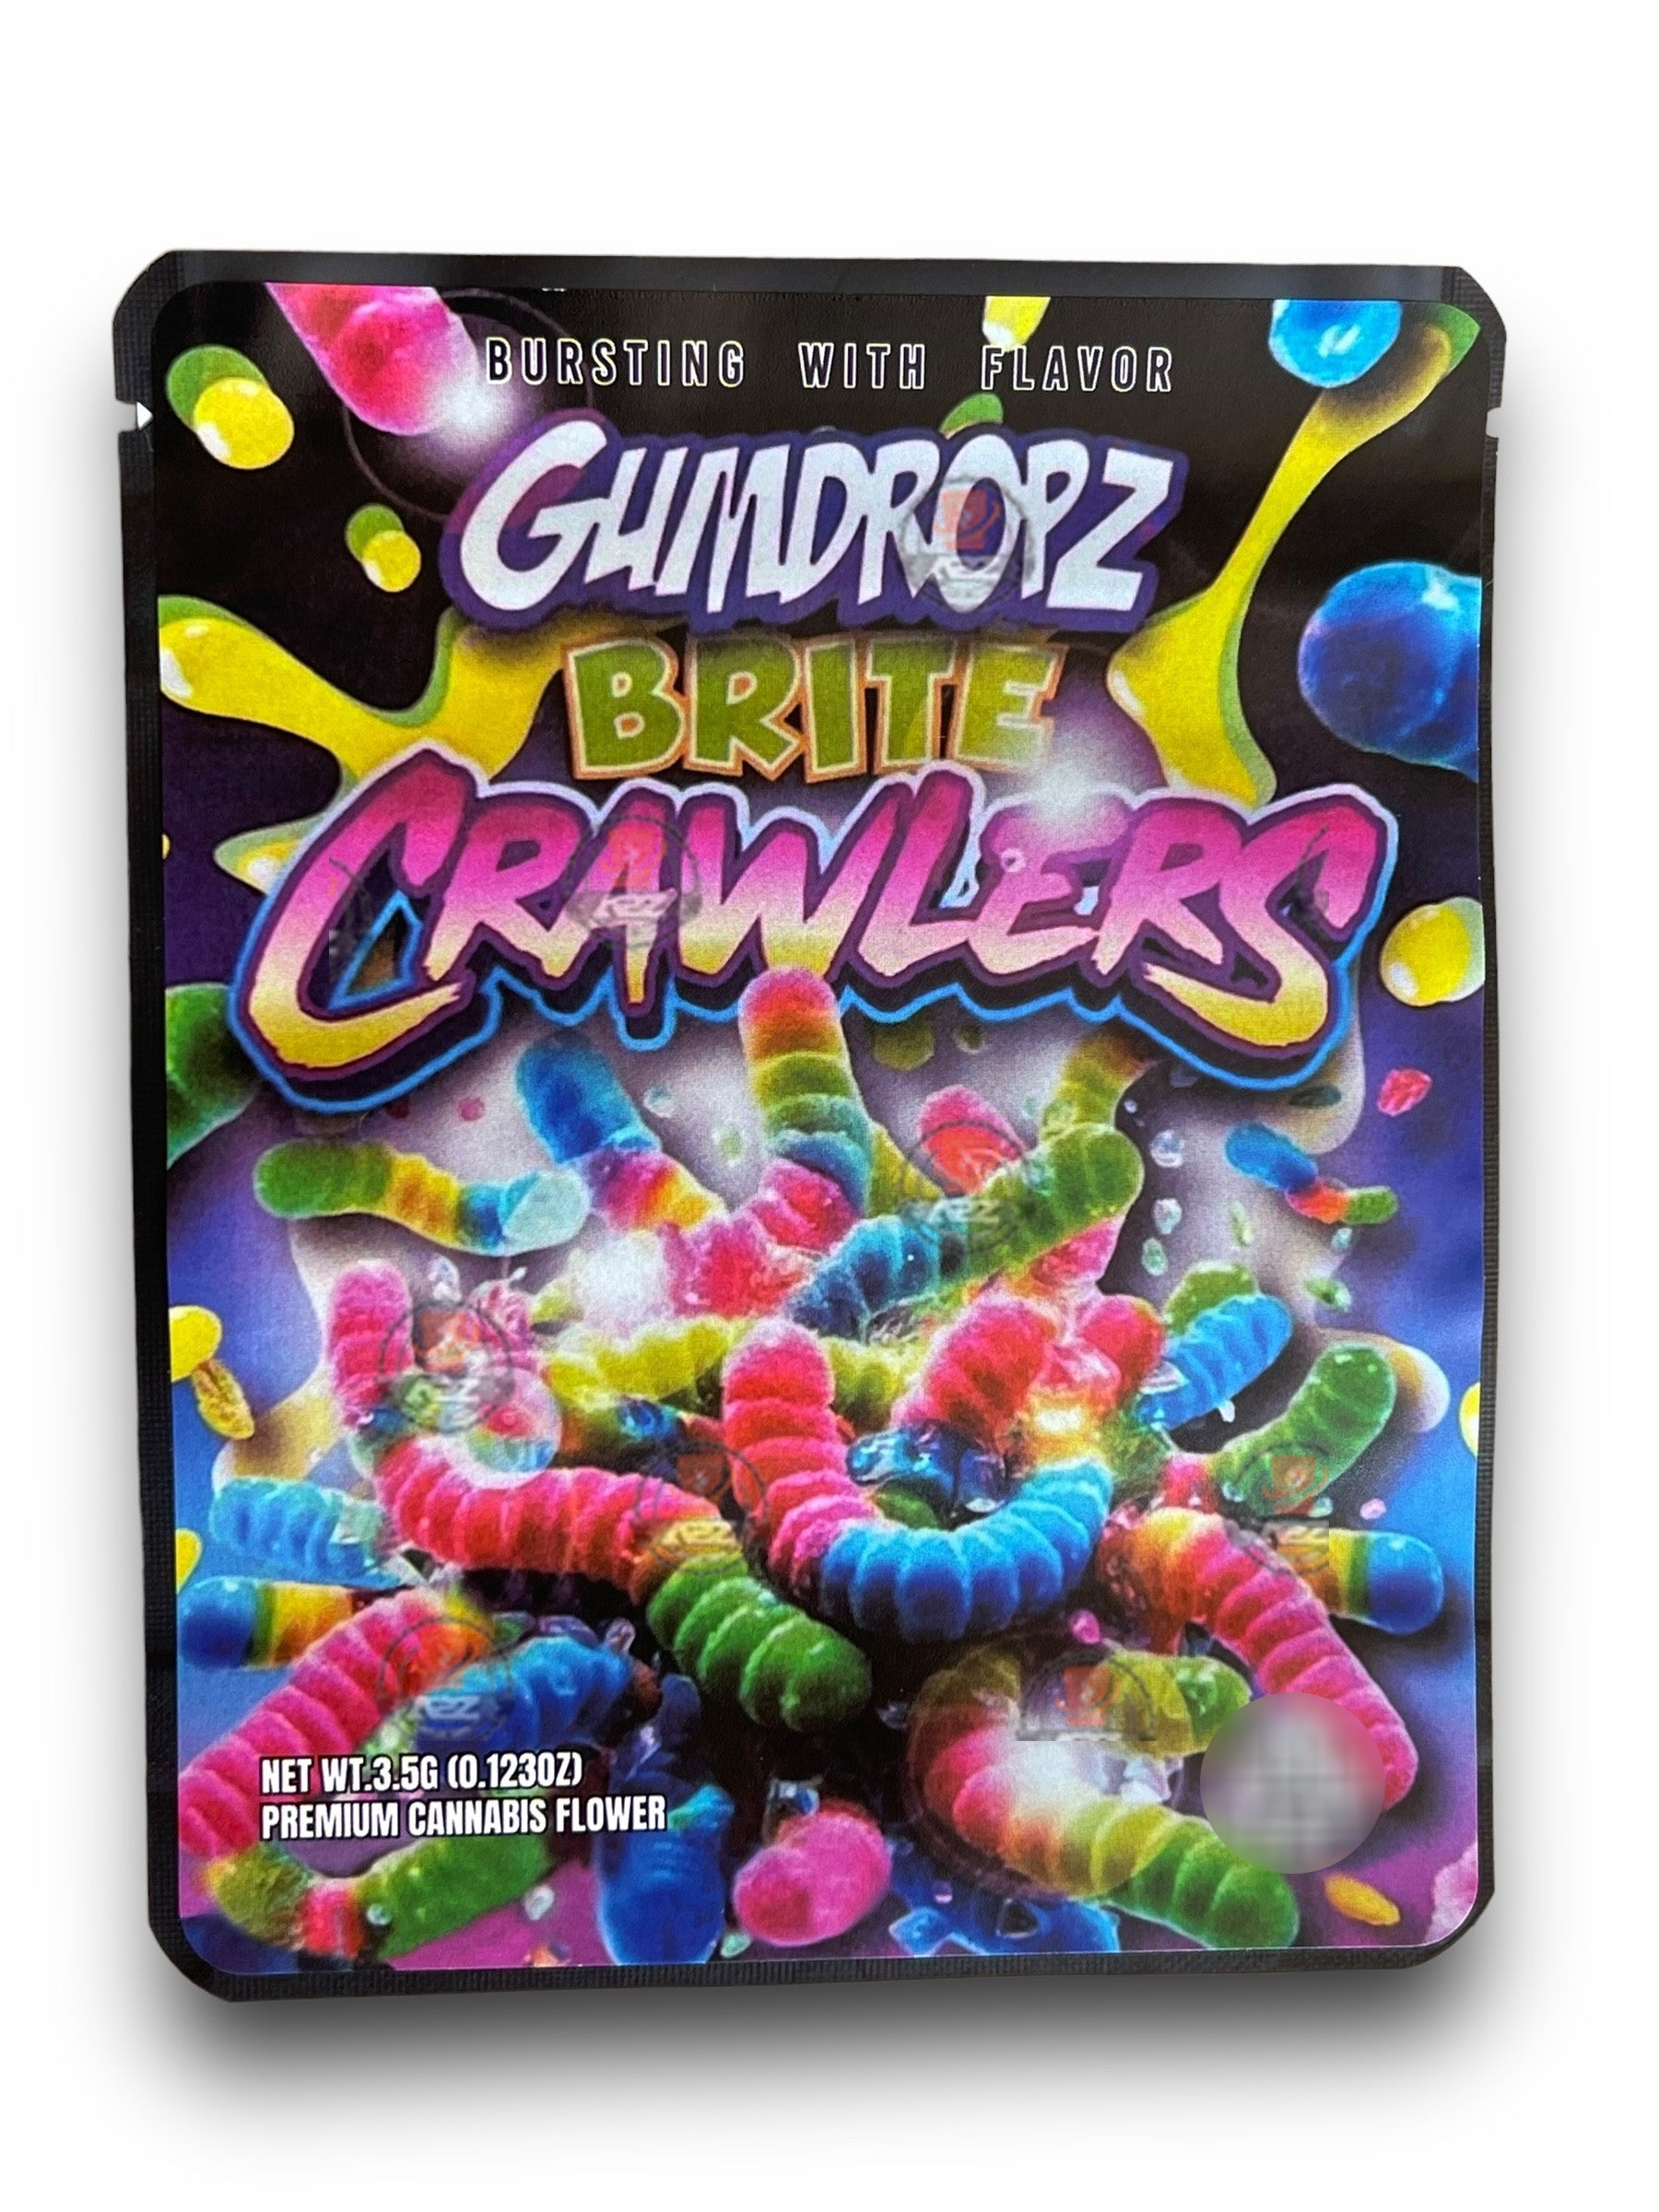 Sprinklez Gumdropz Brite Crawlers 3.5G Mylar Bags -With stickers and label